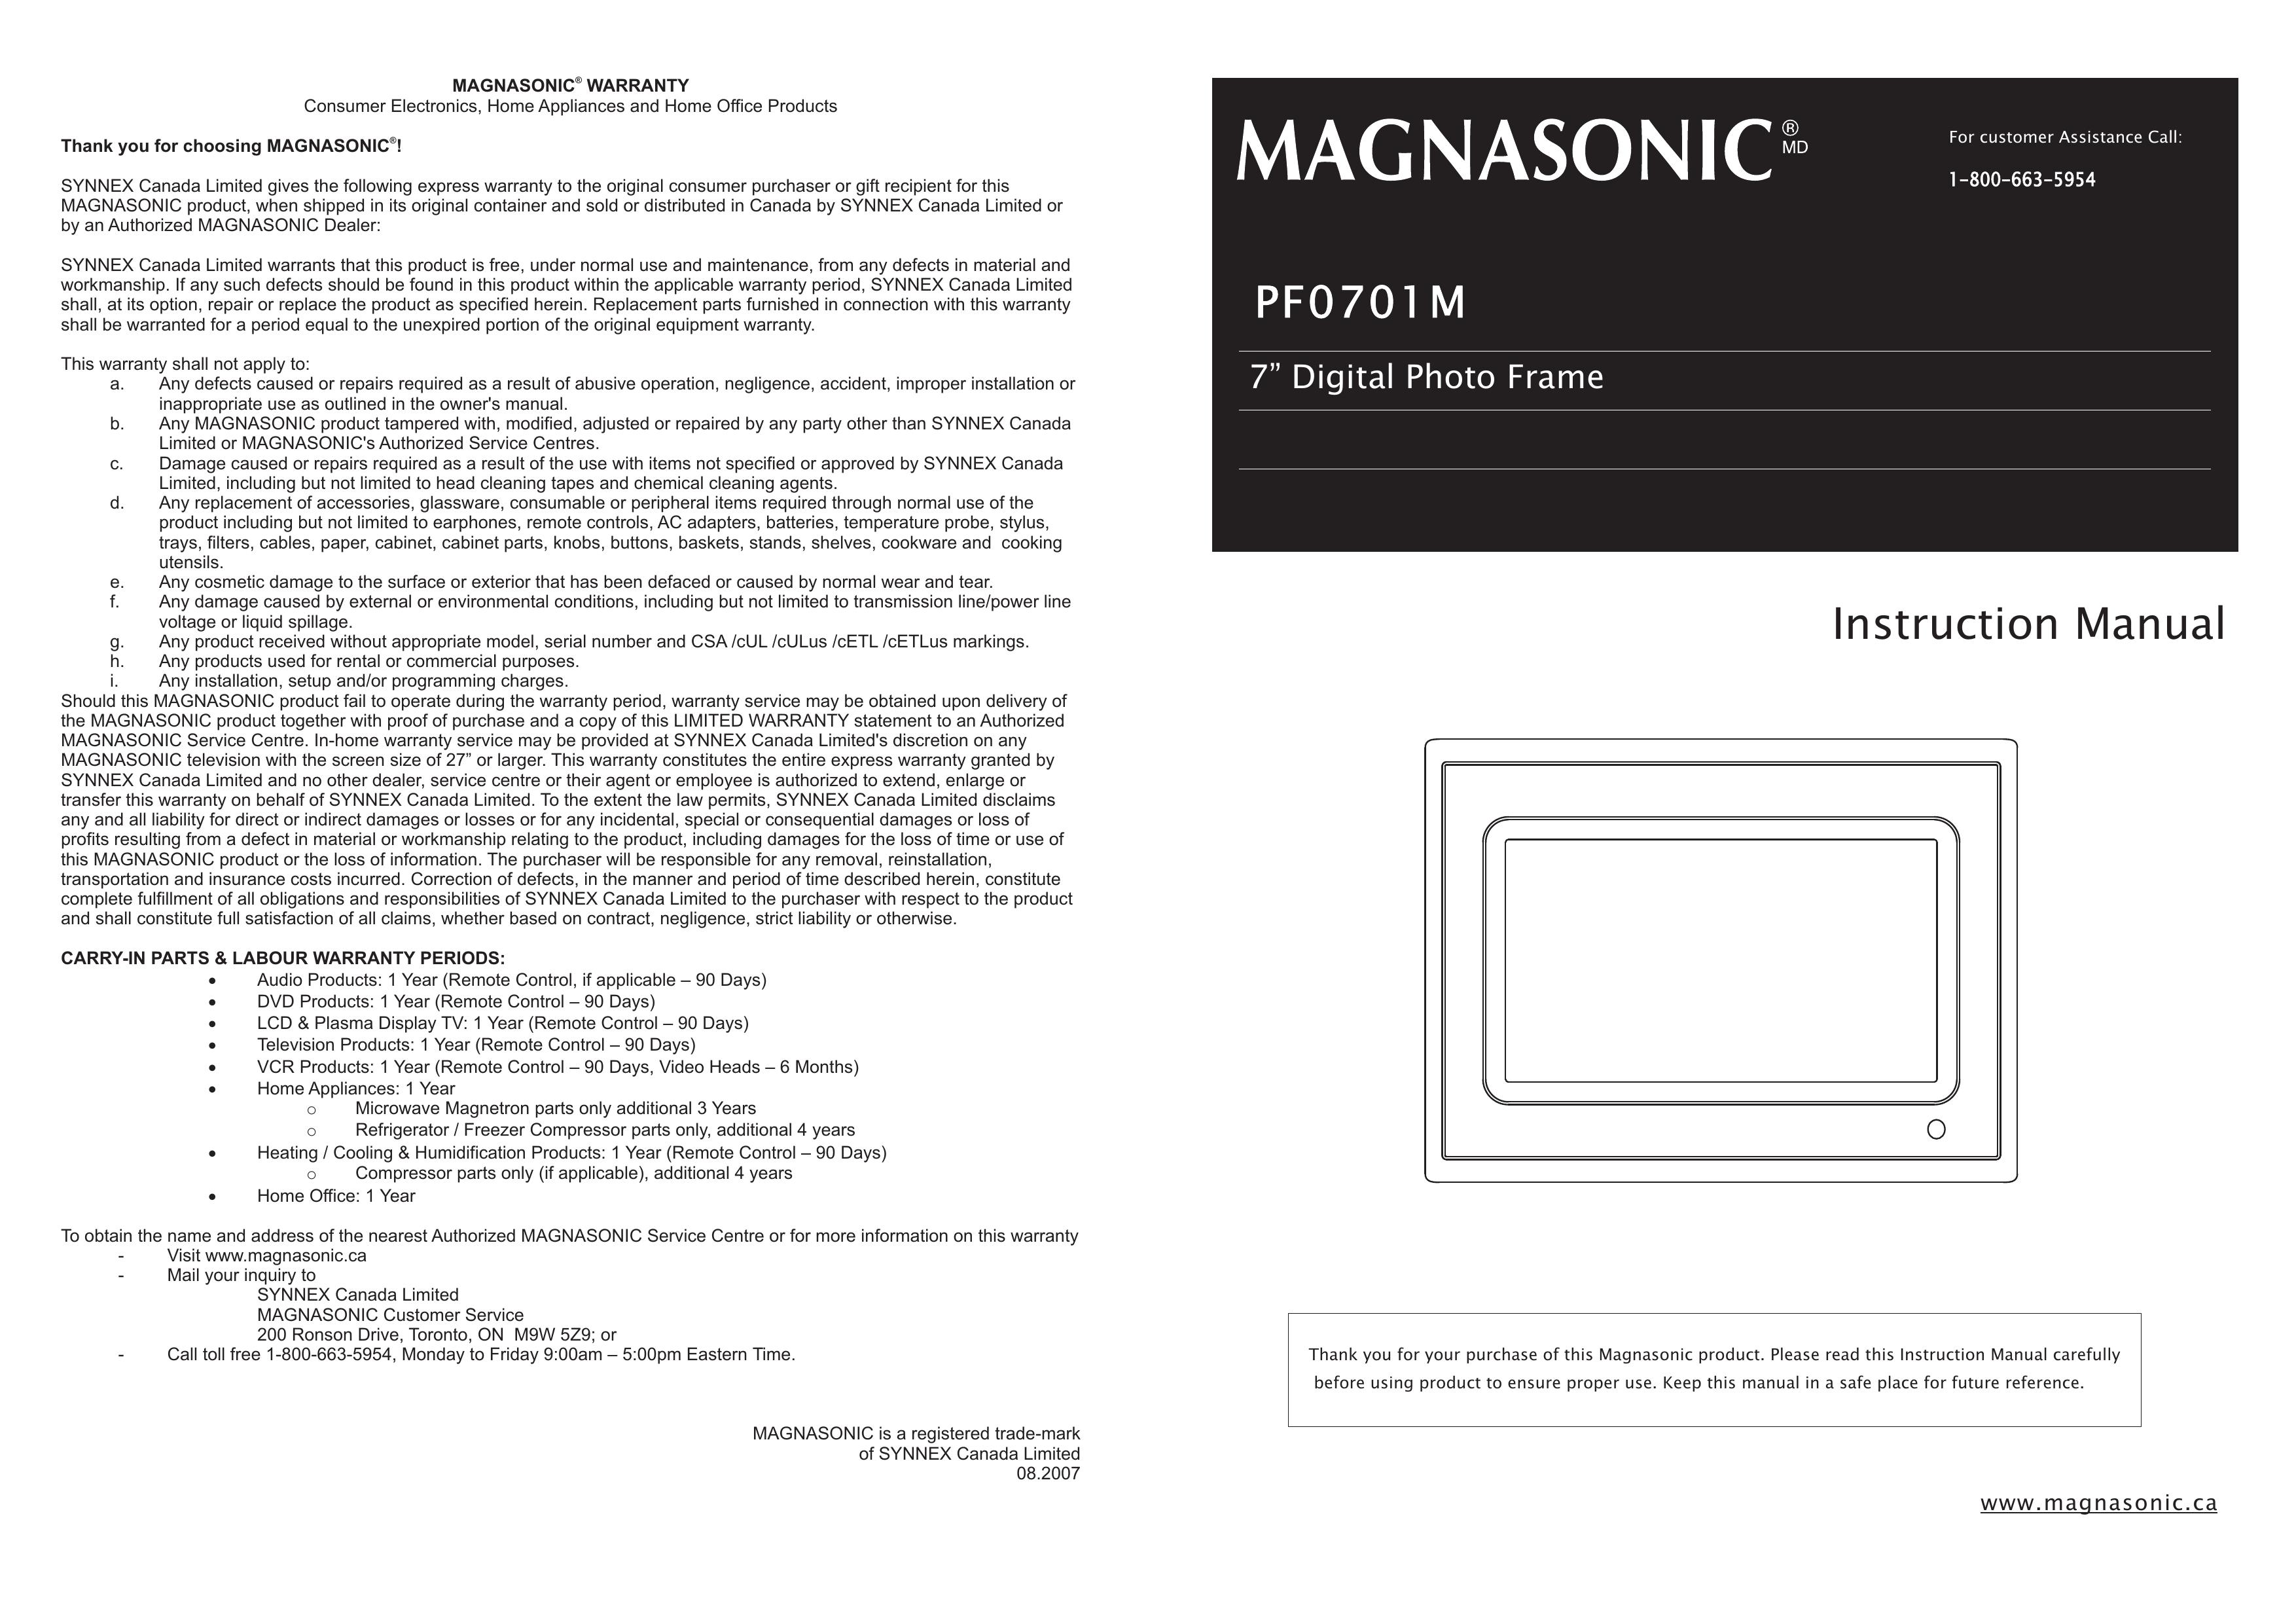 Magnasonic PF0701M Digital Photo Frame User Manual